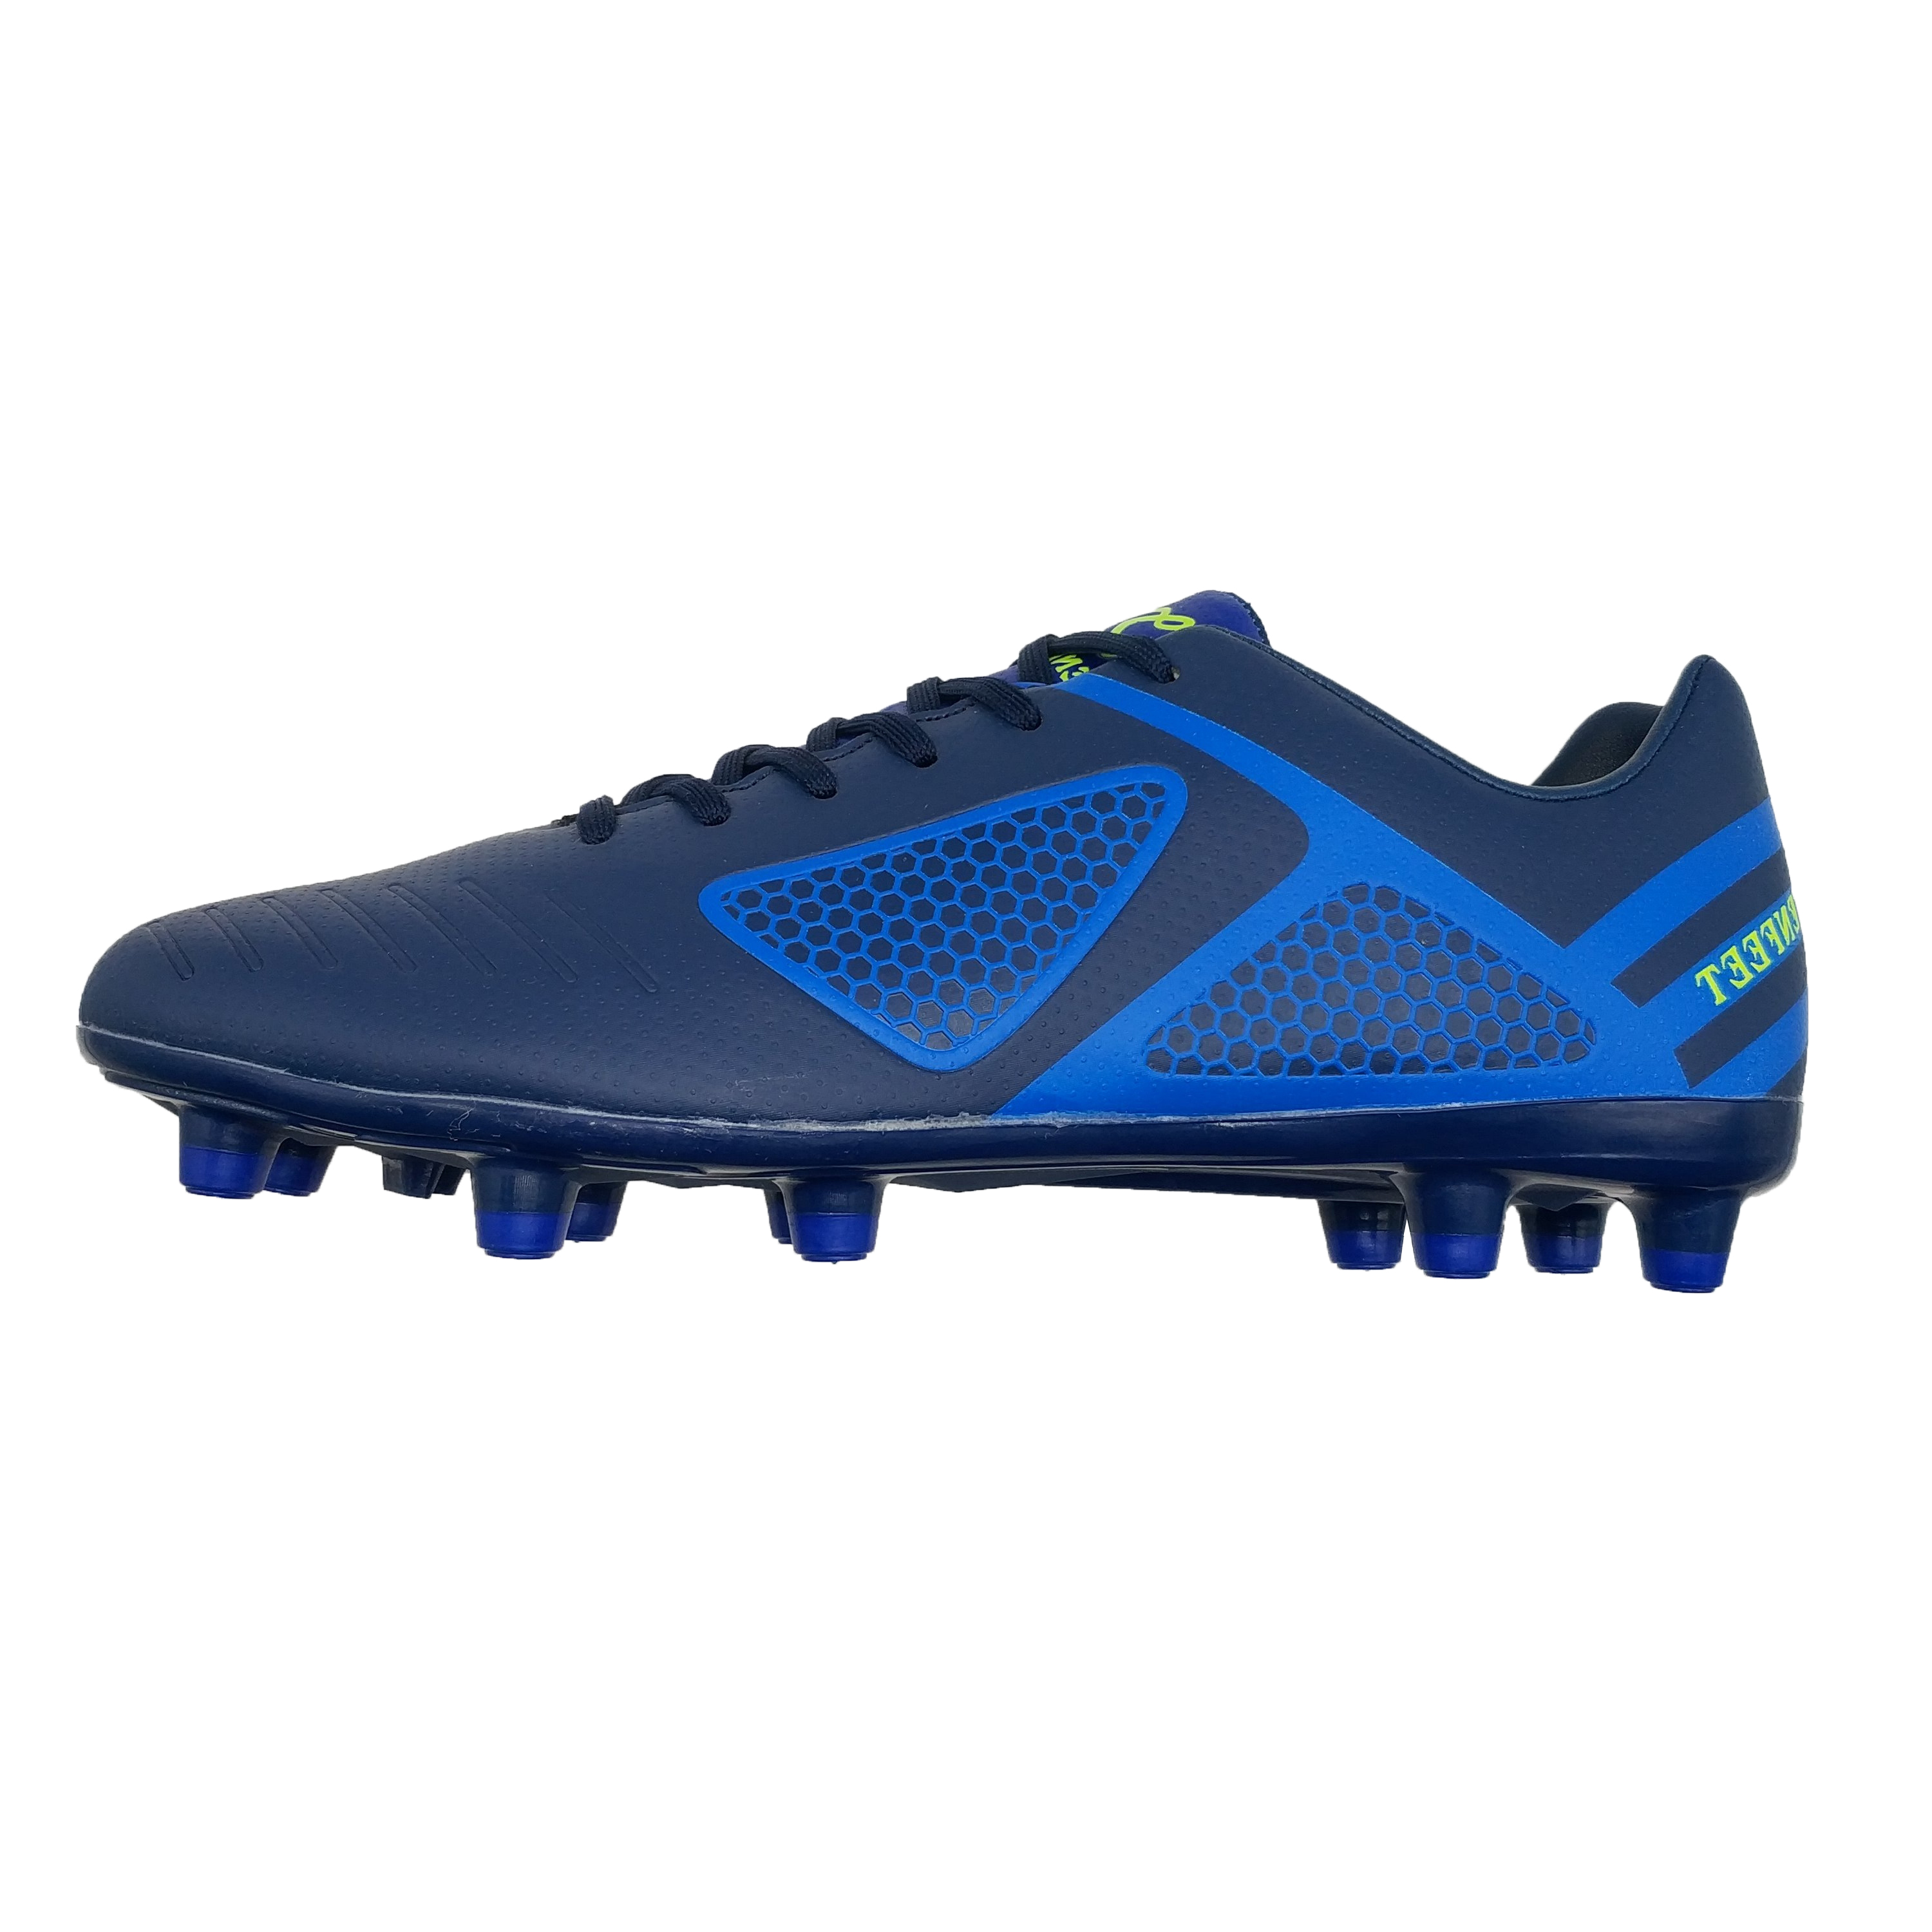 Oem Factory Fashion Futebol Boots China Supplier Original Soccer Shoes